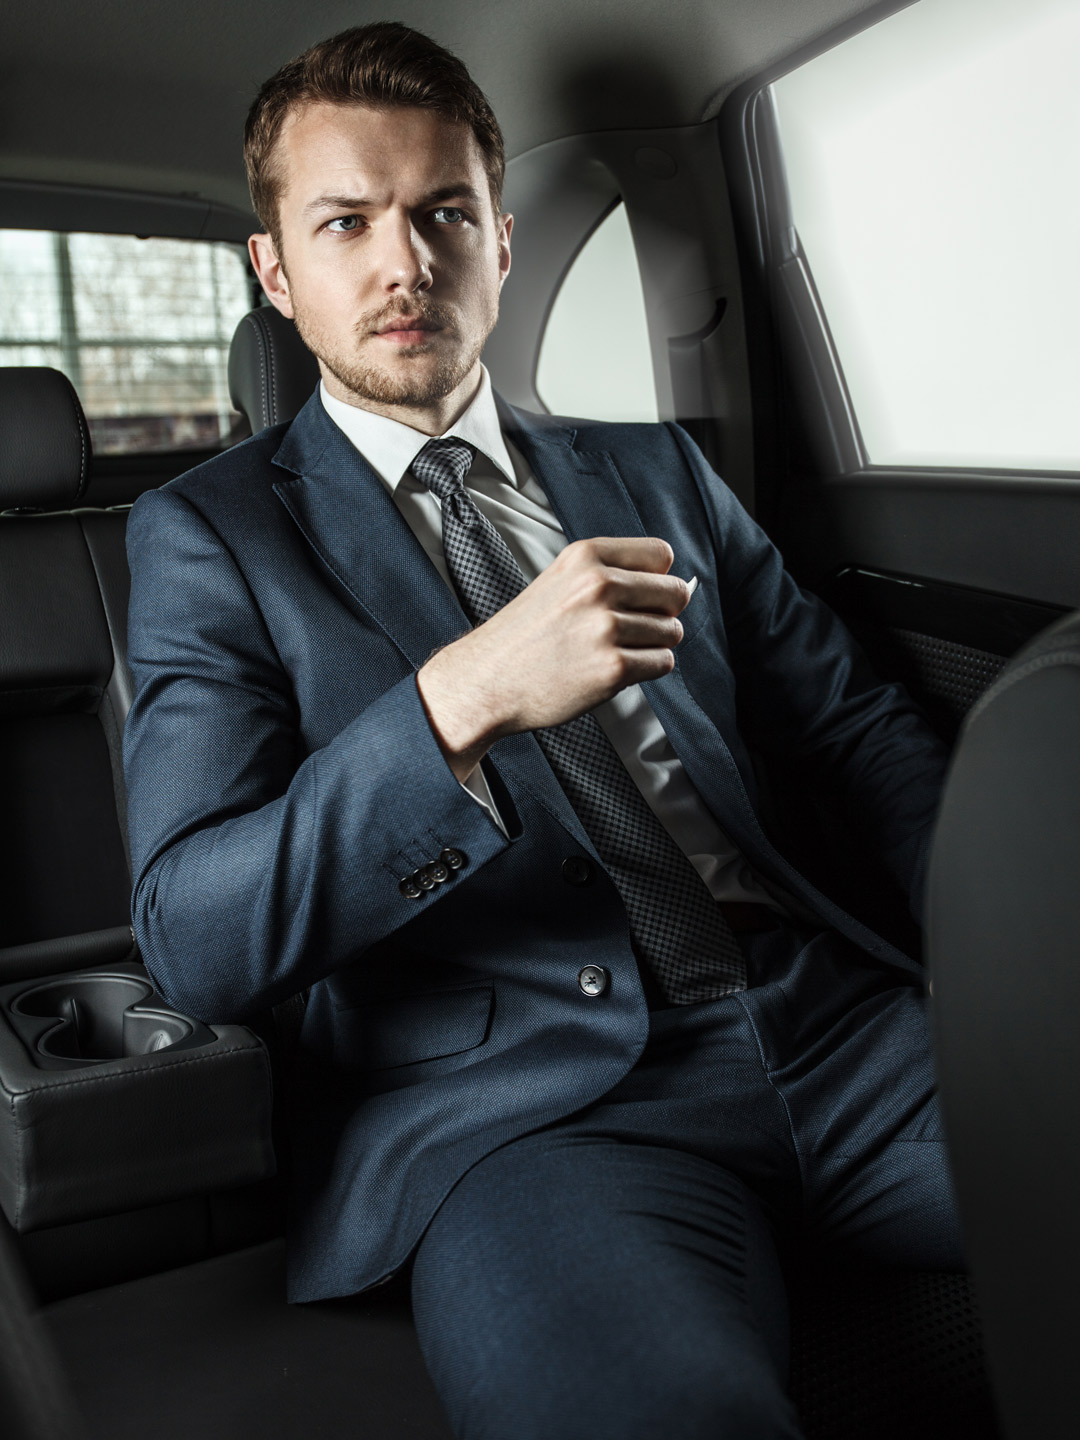 Businessman in the car | Executive Sedan in New York City, Black Car, SUV, Limo, Sprinter